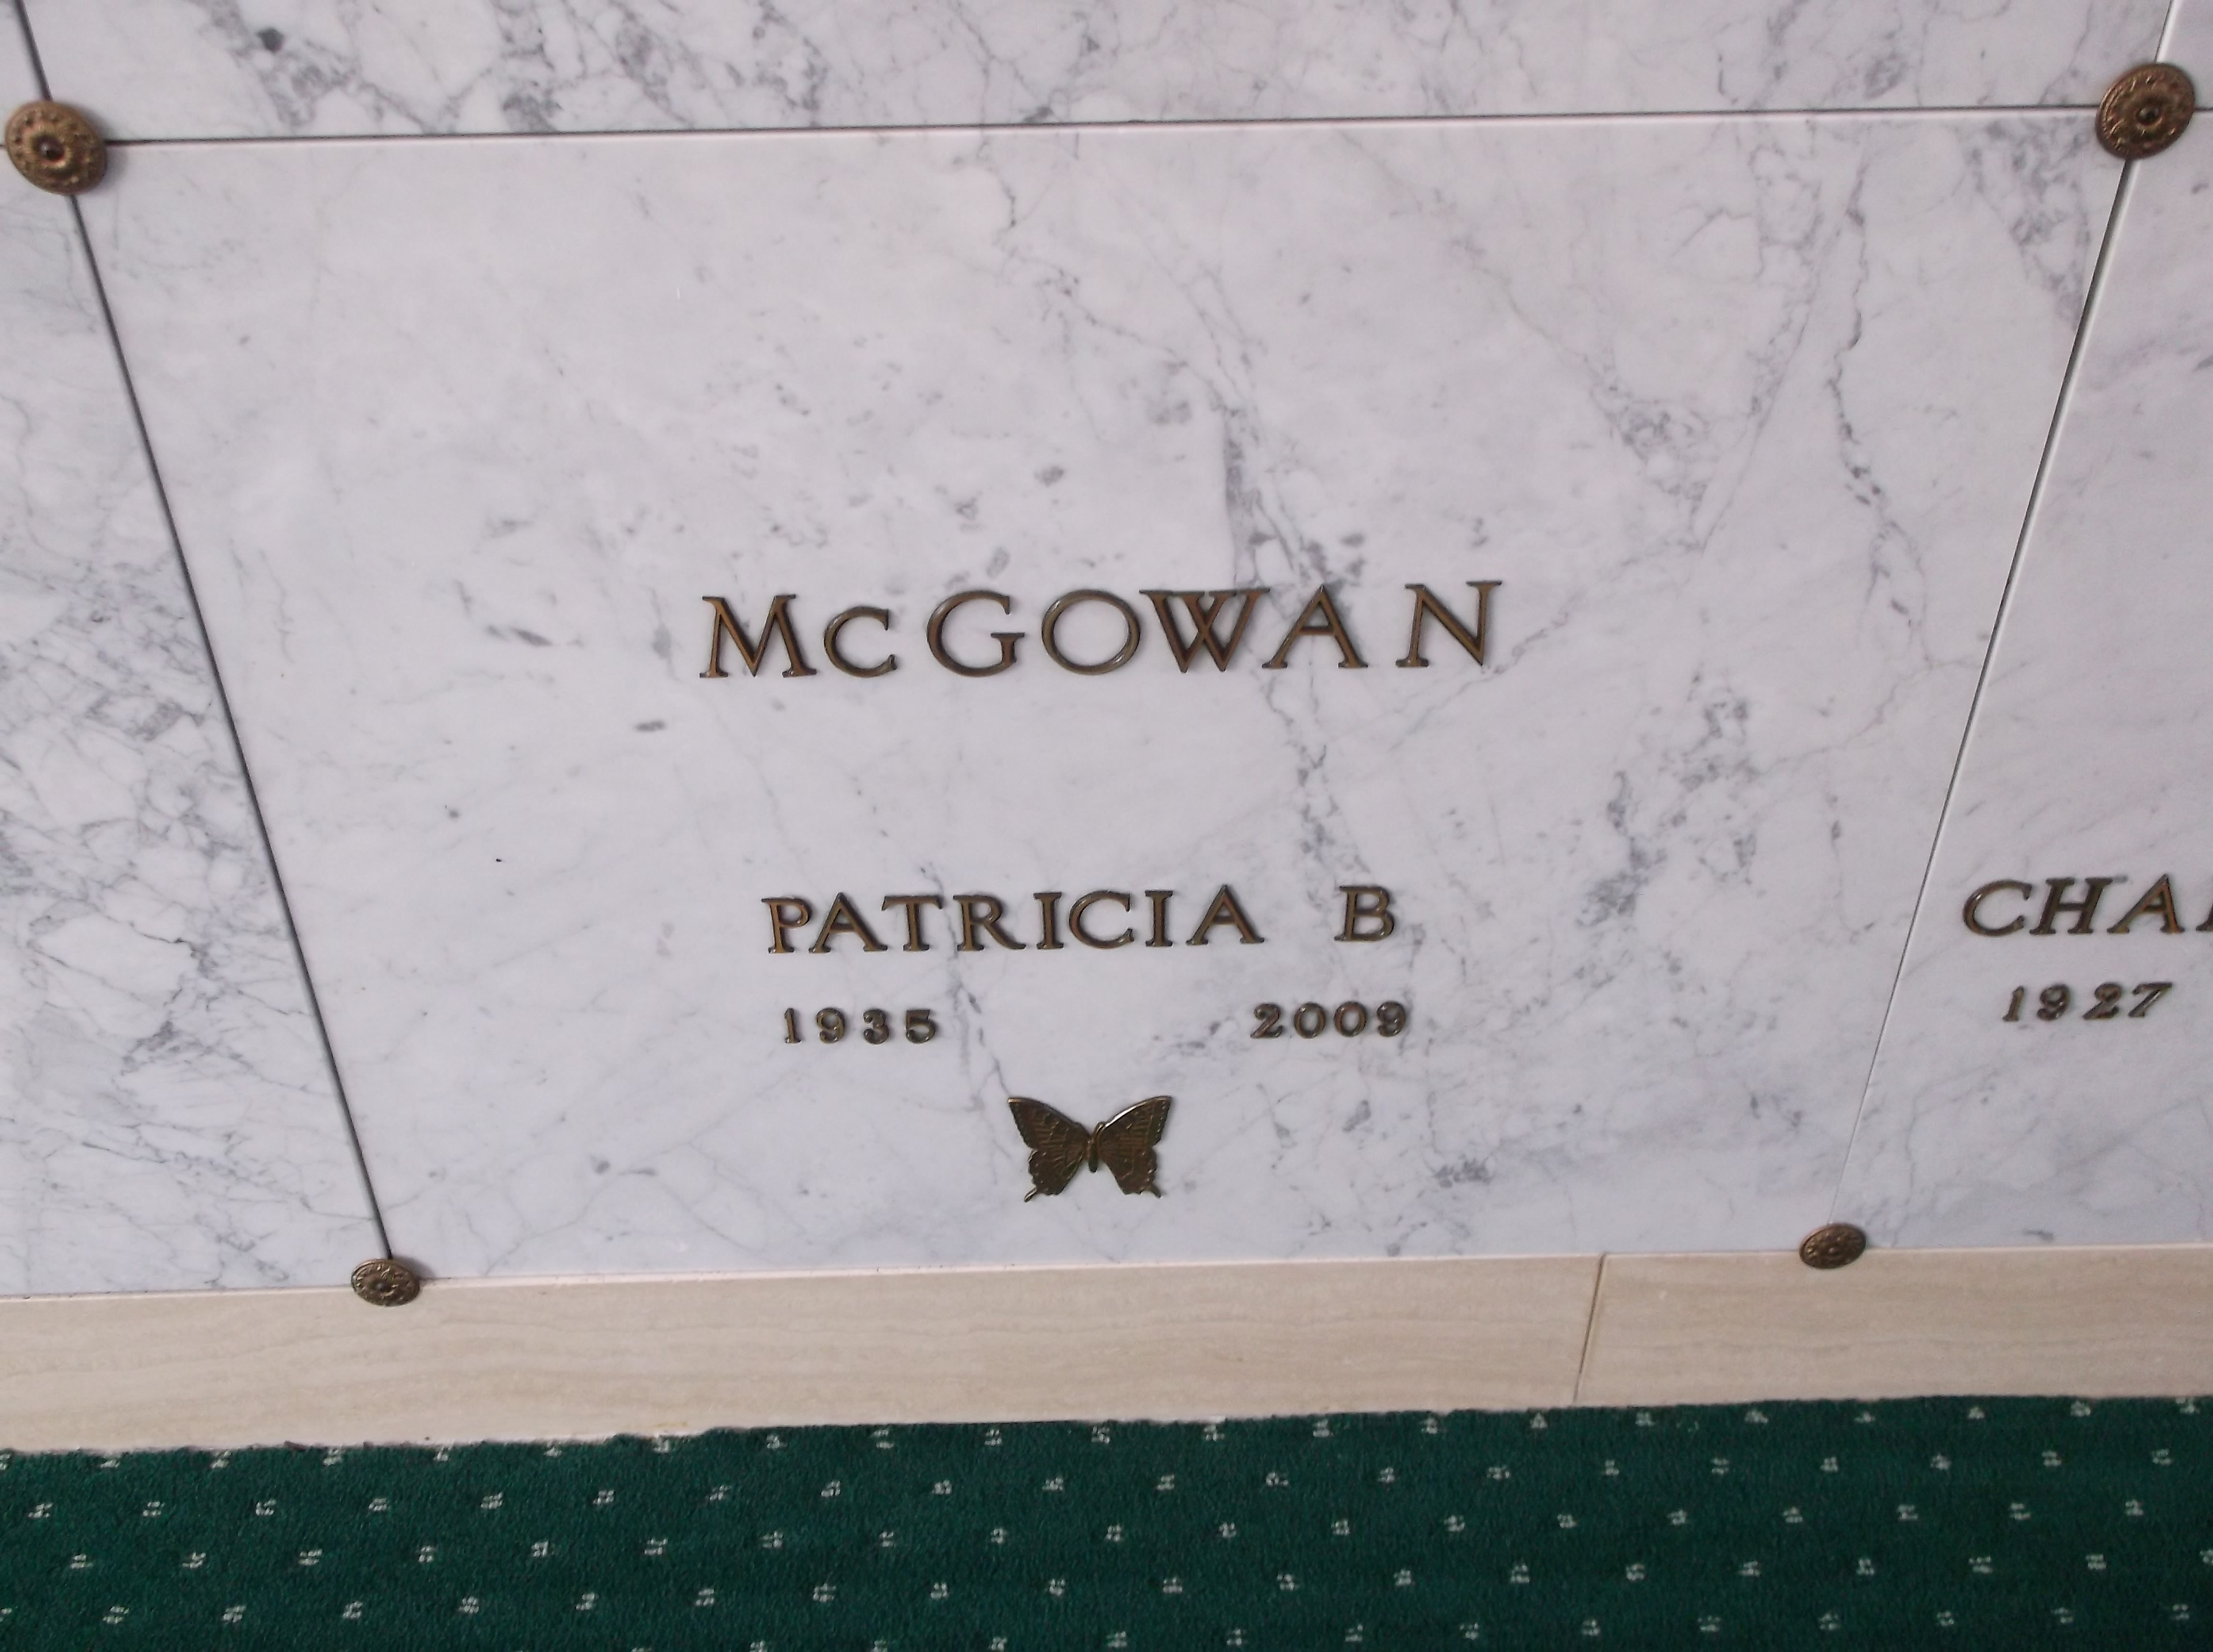 Patricia B McGowan